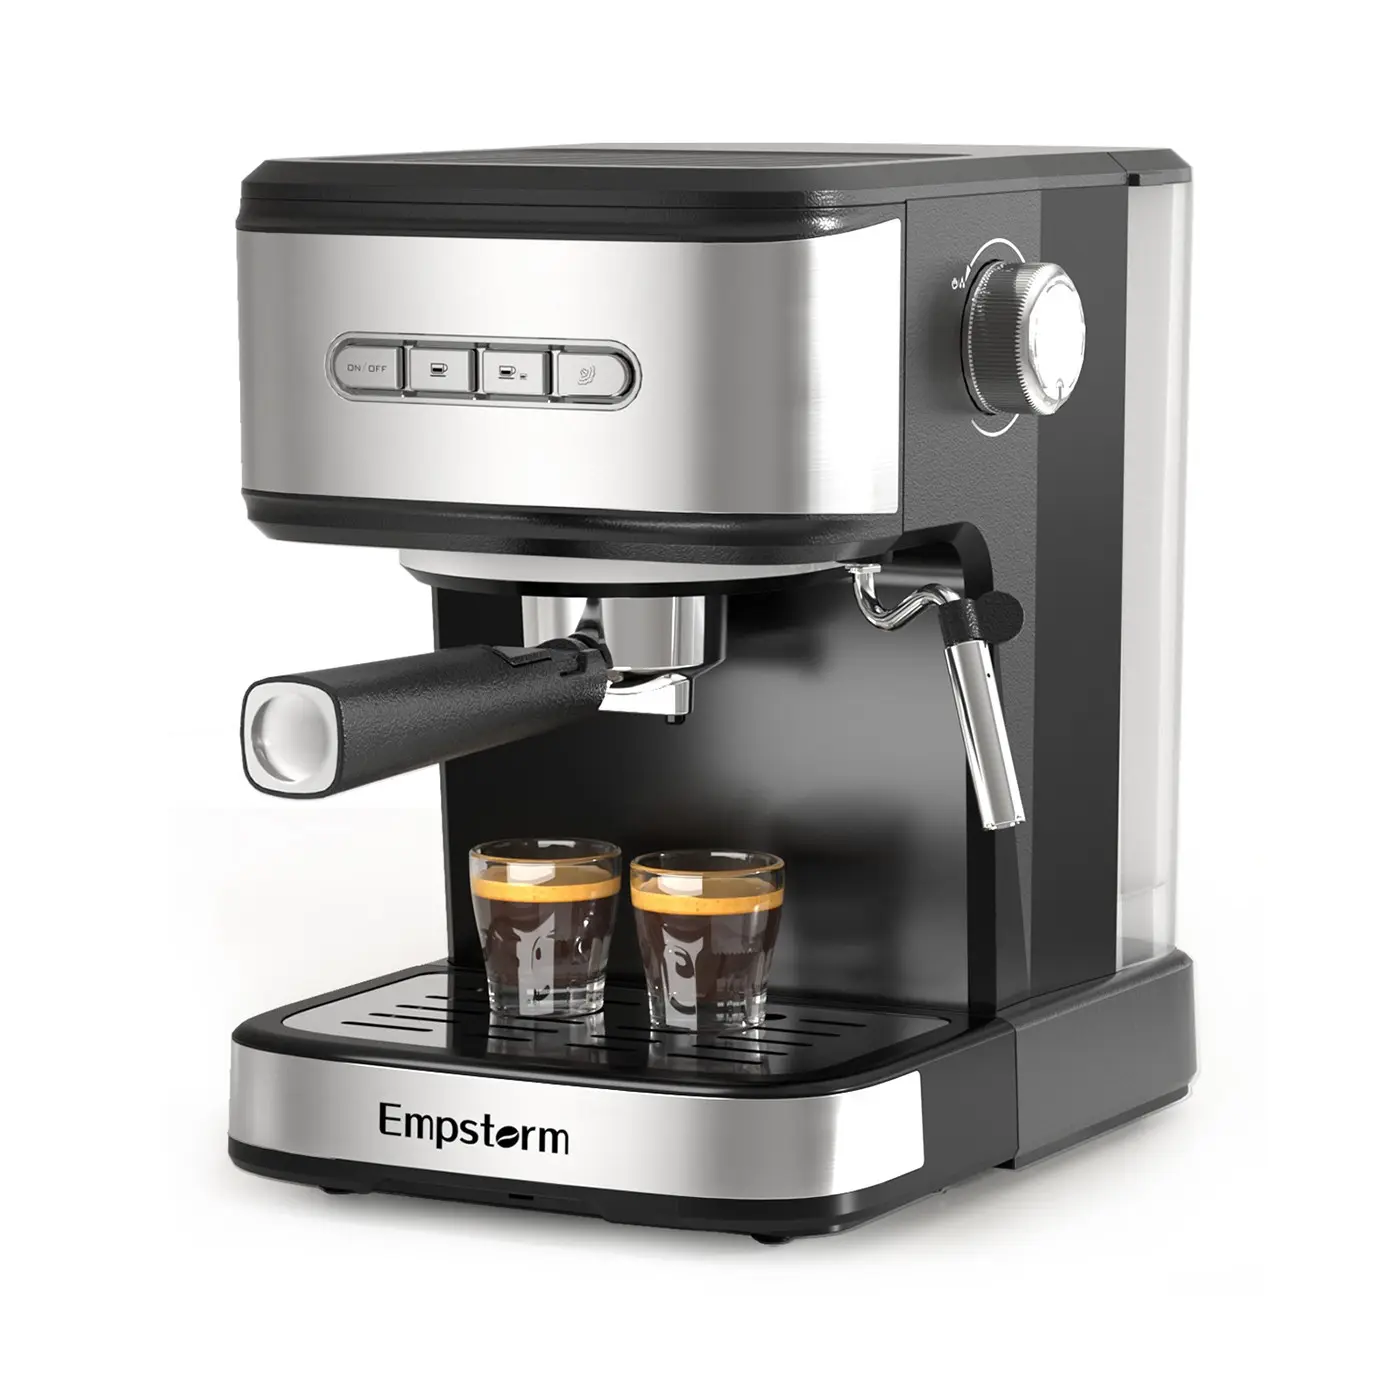 Empstorm capsule coffee maker 20Bar extraction machine professional semi automatic espresso coffee machine with portable manual